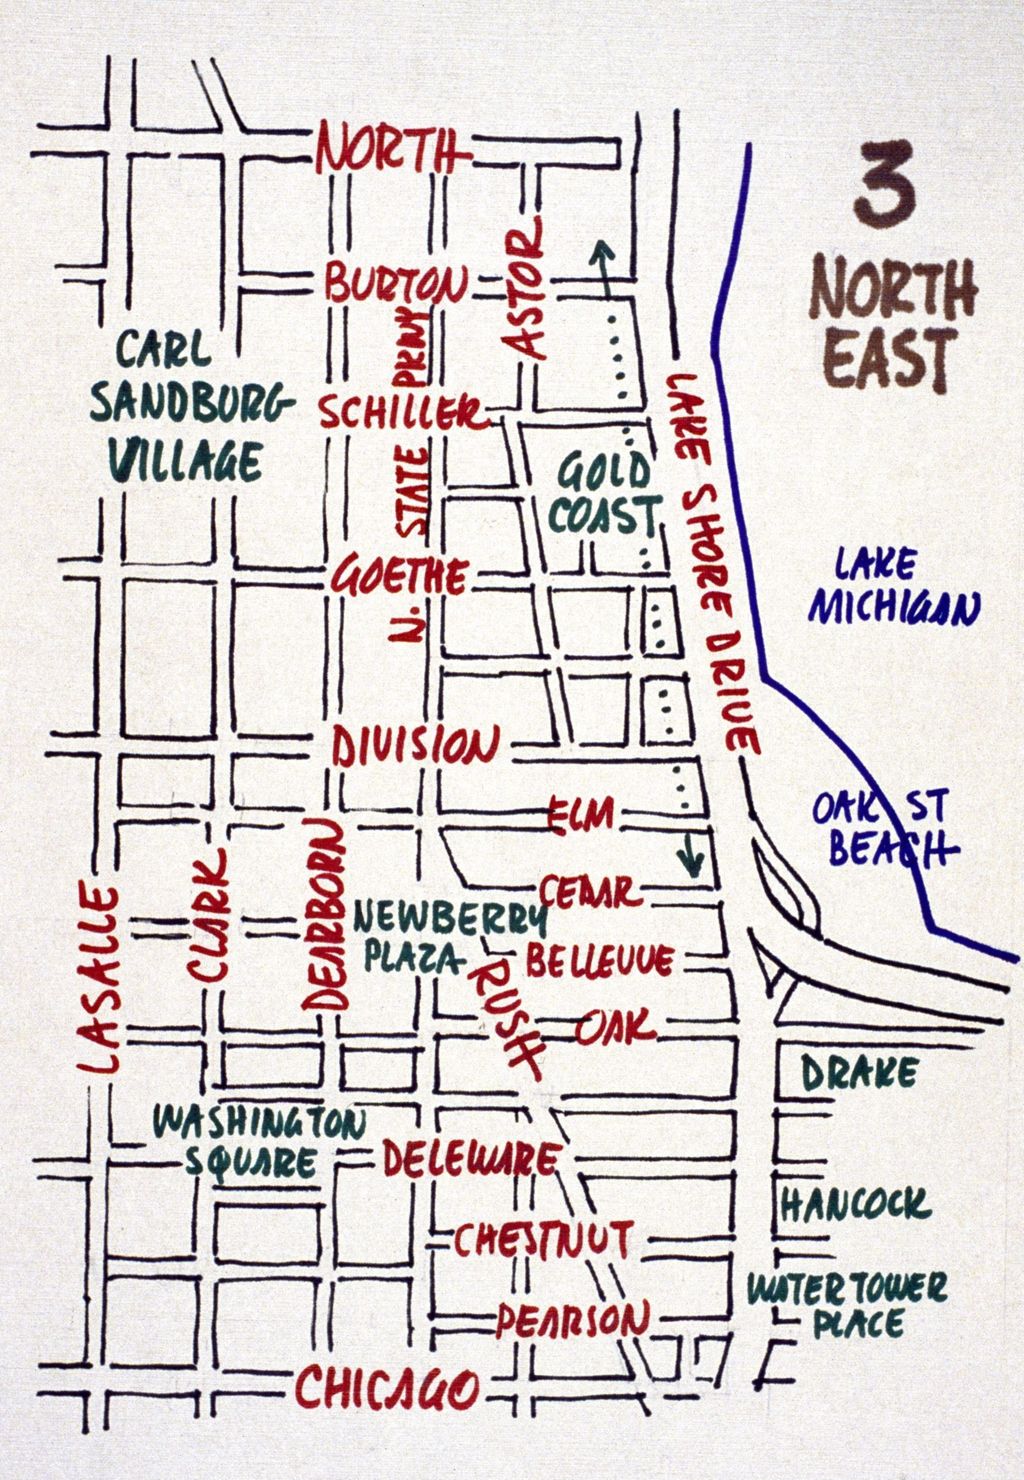 Near North Side, northeast area